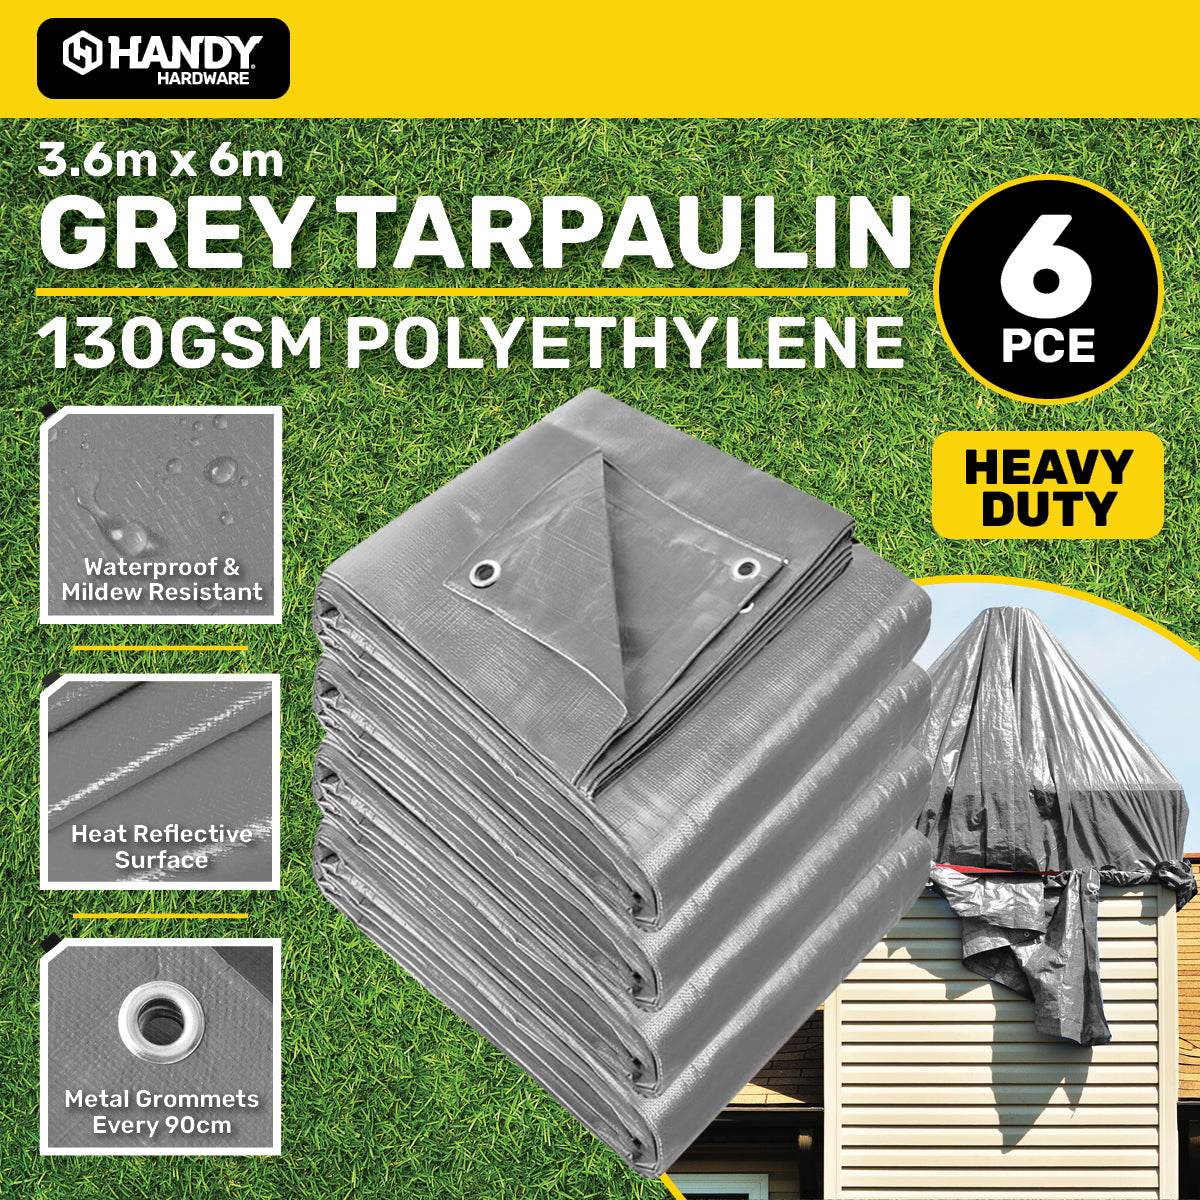 Handy Hardware 6PCE 130GSM Grey Tarpaulin UV Resistant Waterproof 3.6 x 6m